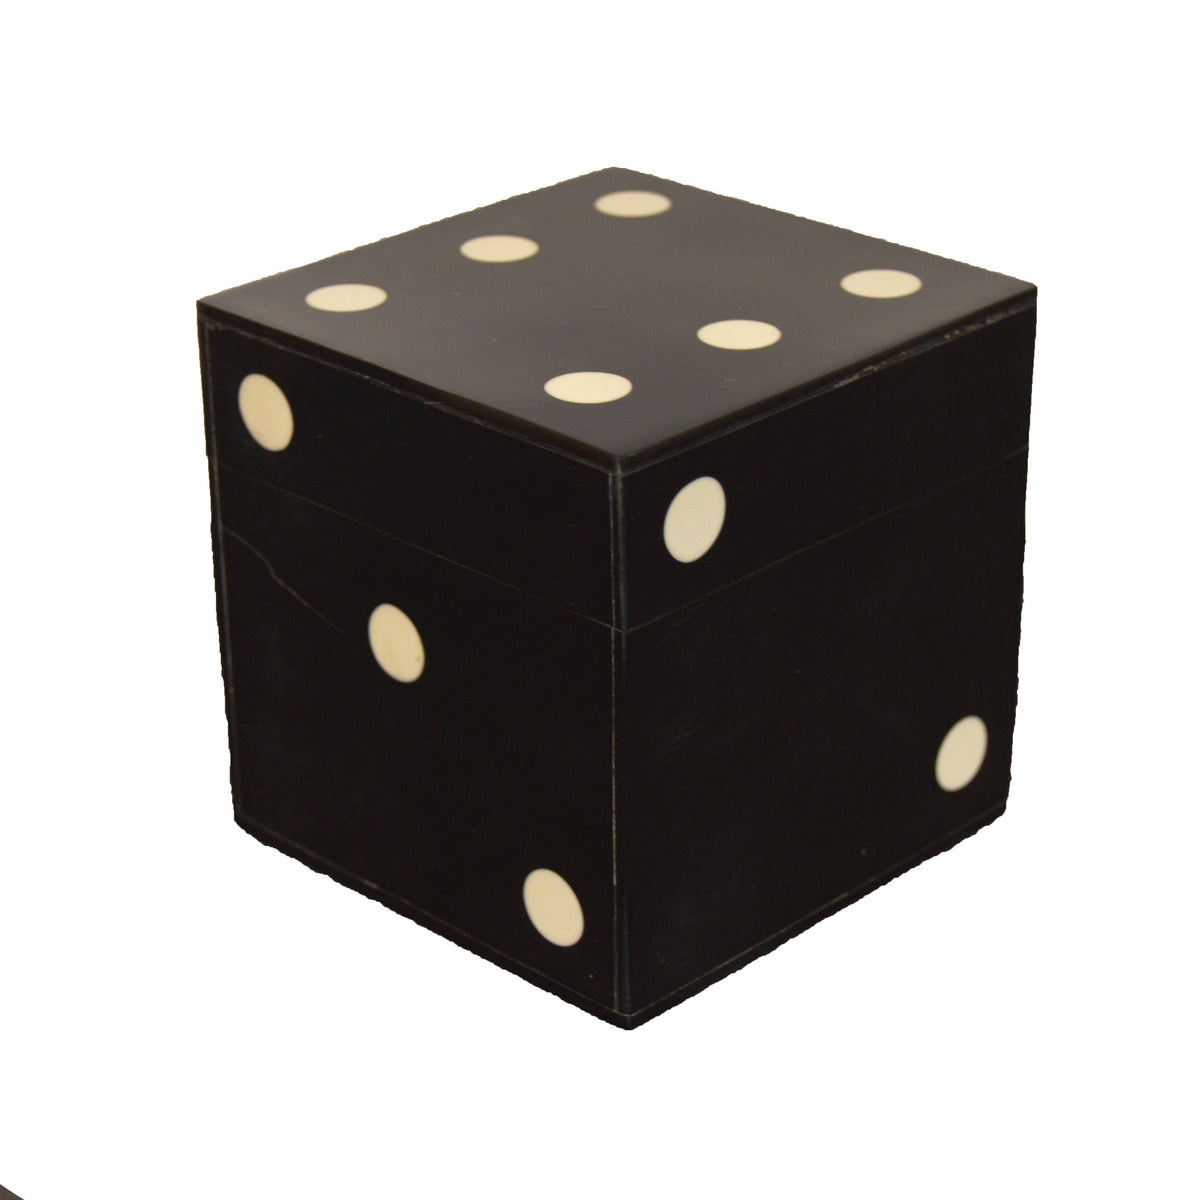 dicebox price